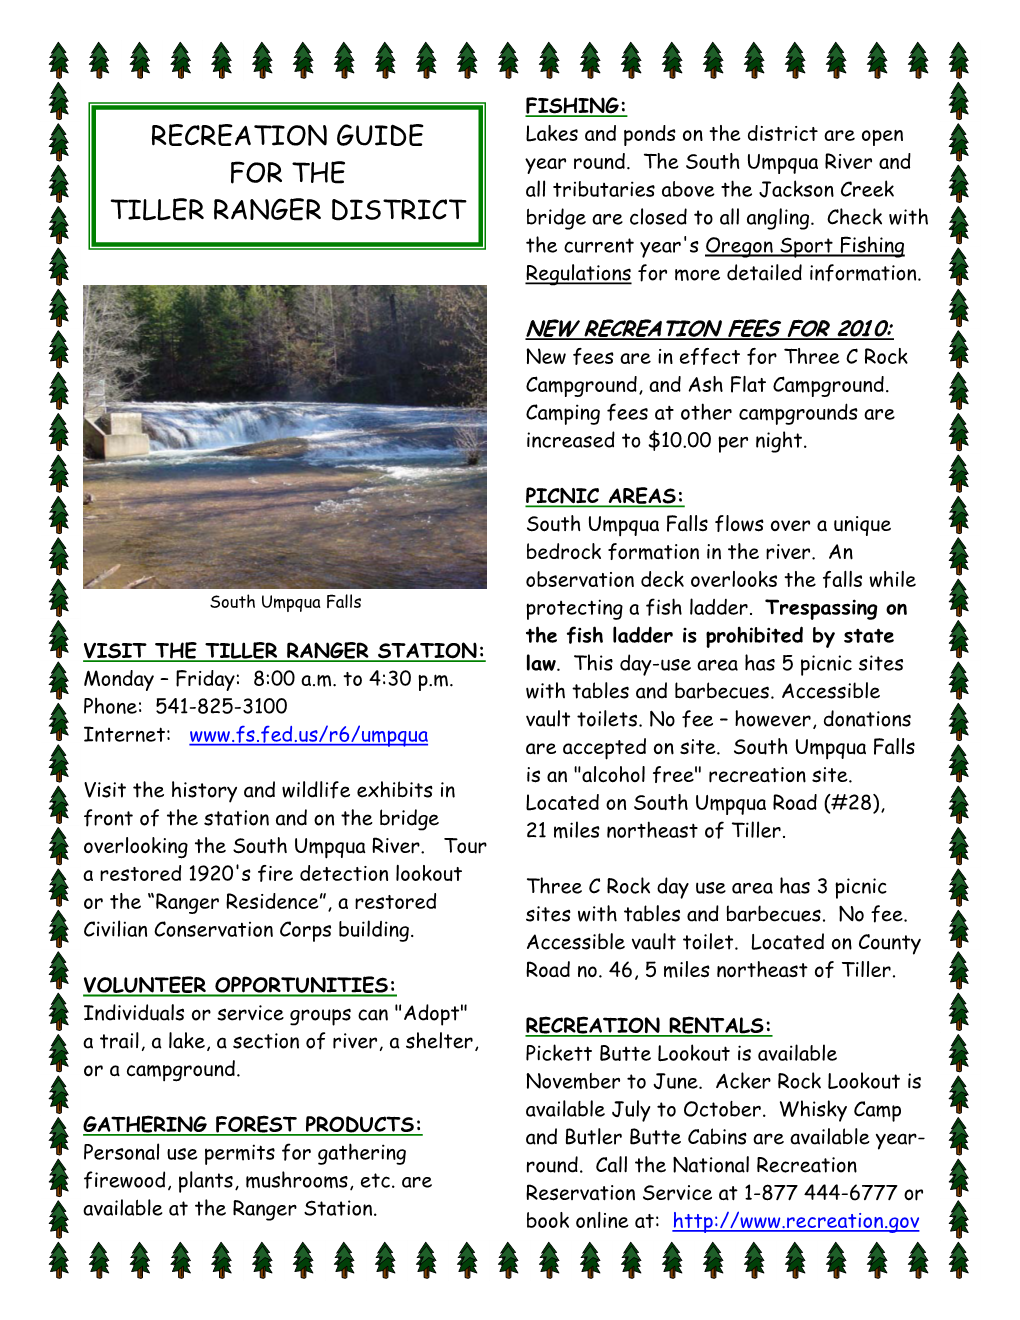 Recreation Guide for the Tiller Ranger District